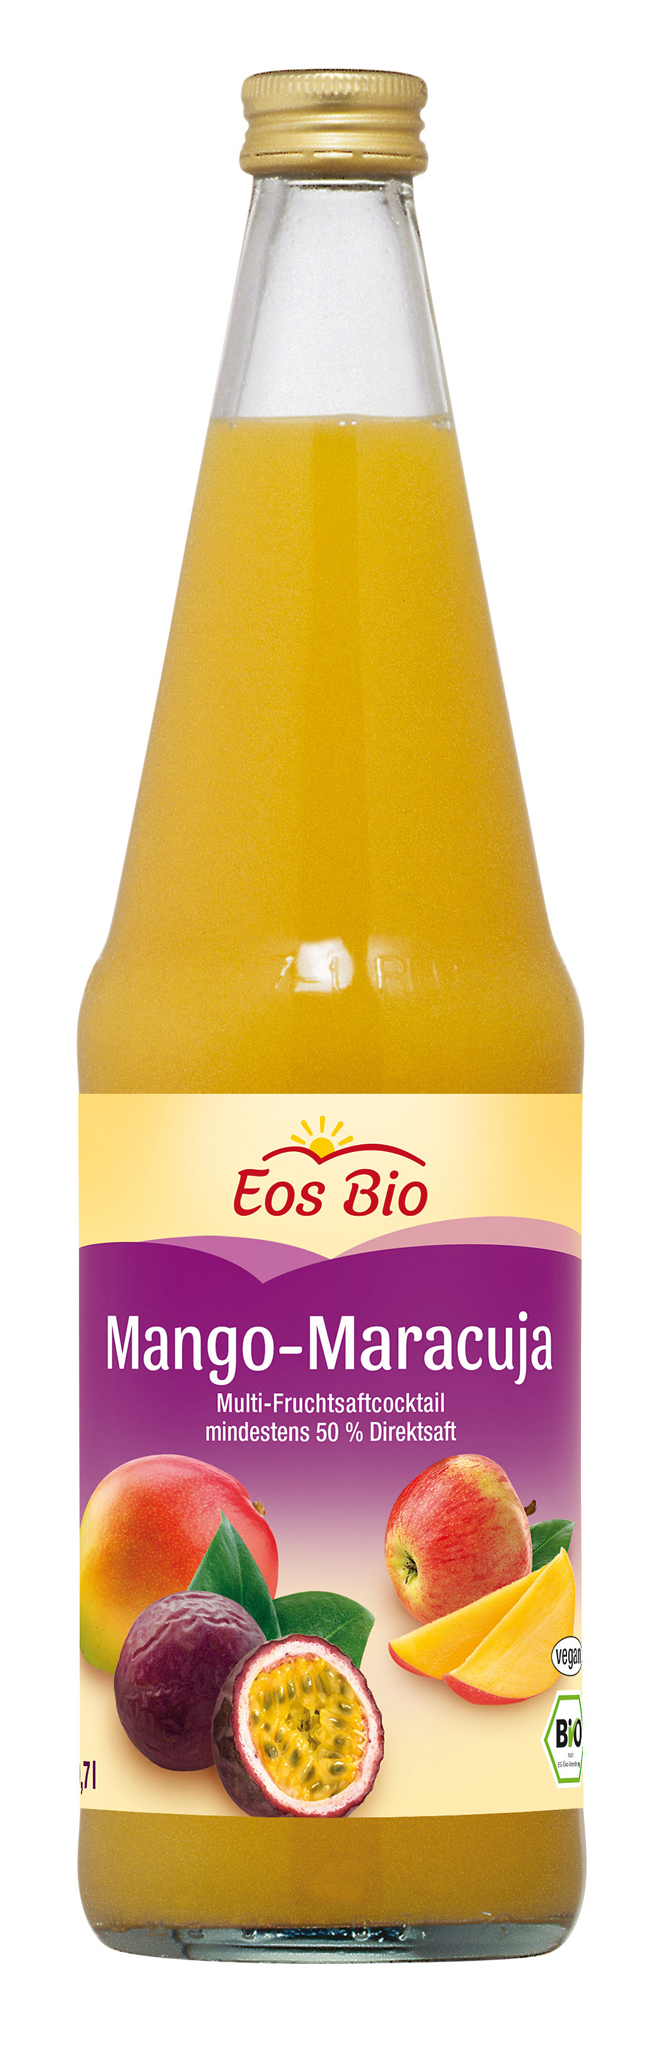 Eos Bio Mango-Maracuja